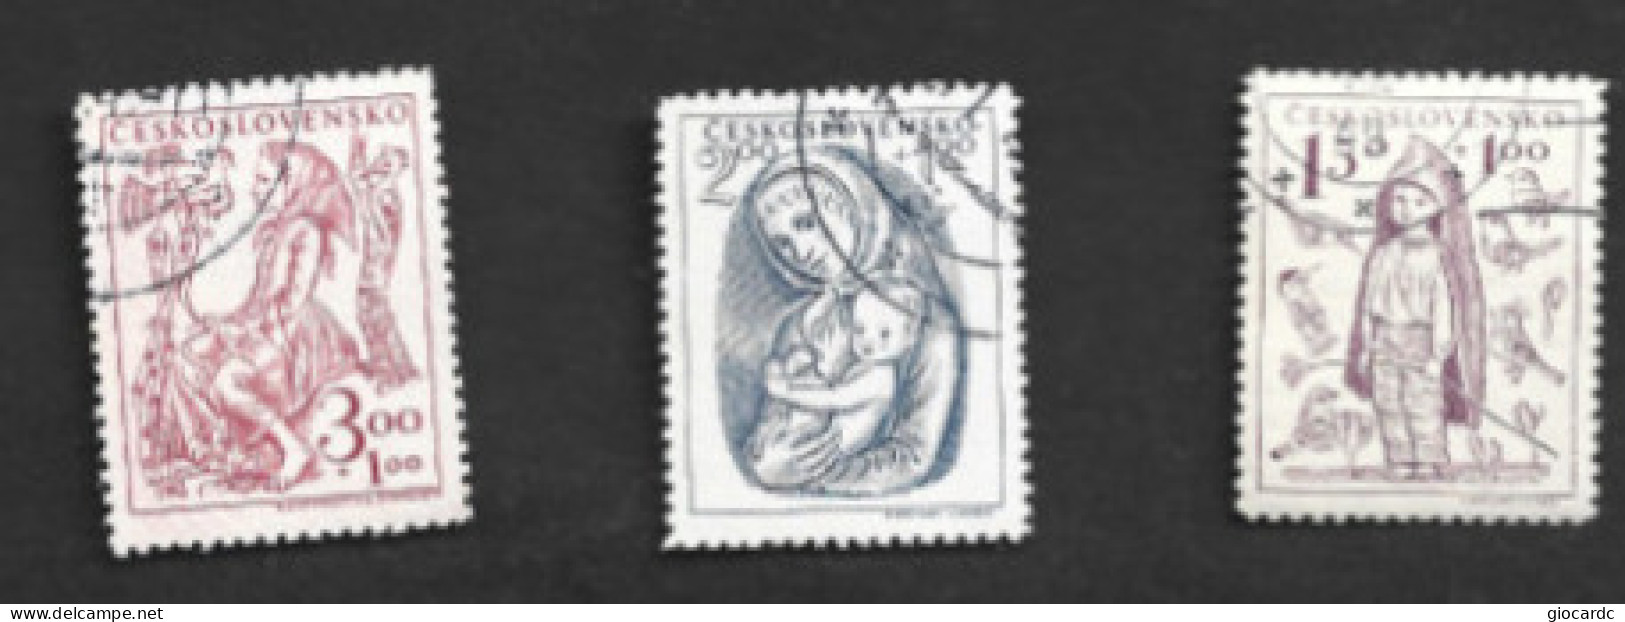 CECOSLOVACCHIA (CZECHOSLOVAKIA) - SG 532.534  - 1948 CHILD WELFARE (COMPLET SET OF 3) - USED - Usati